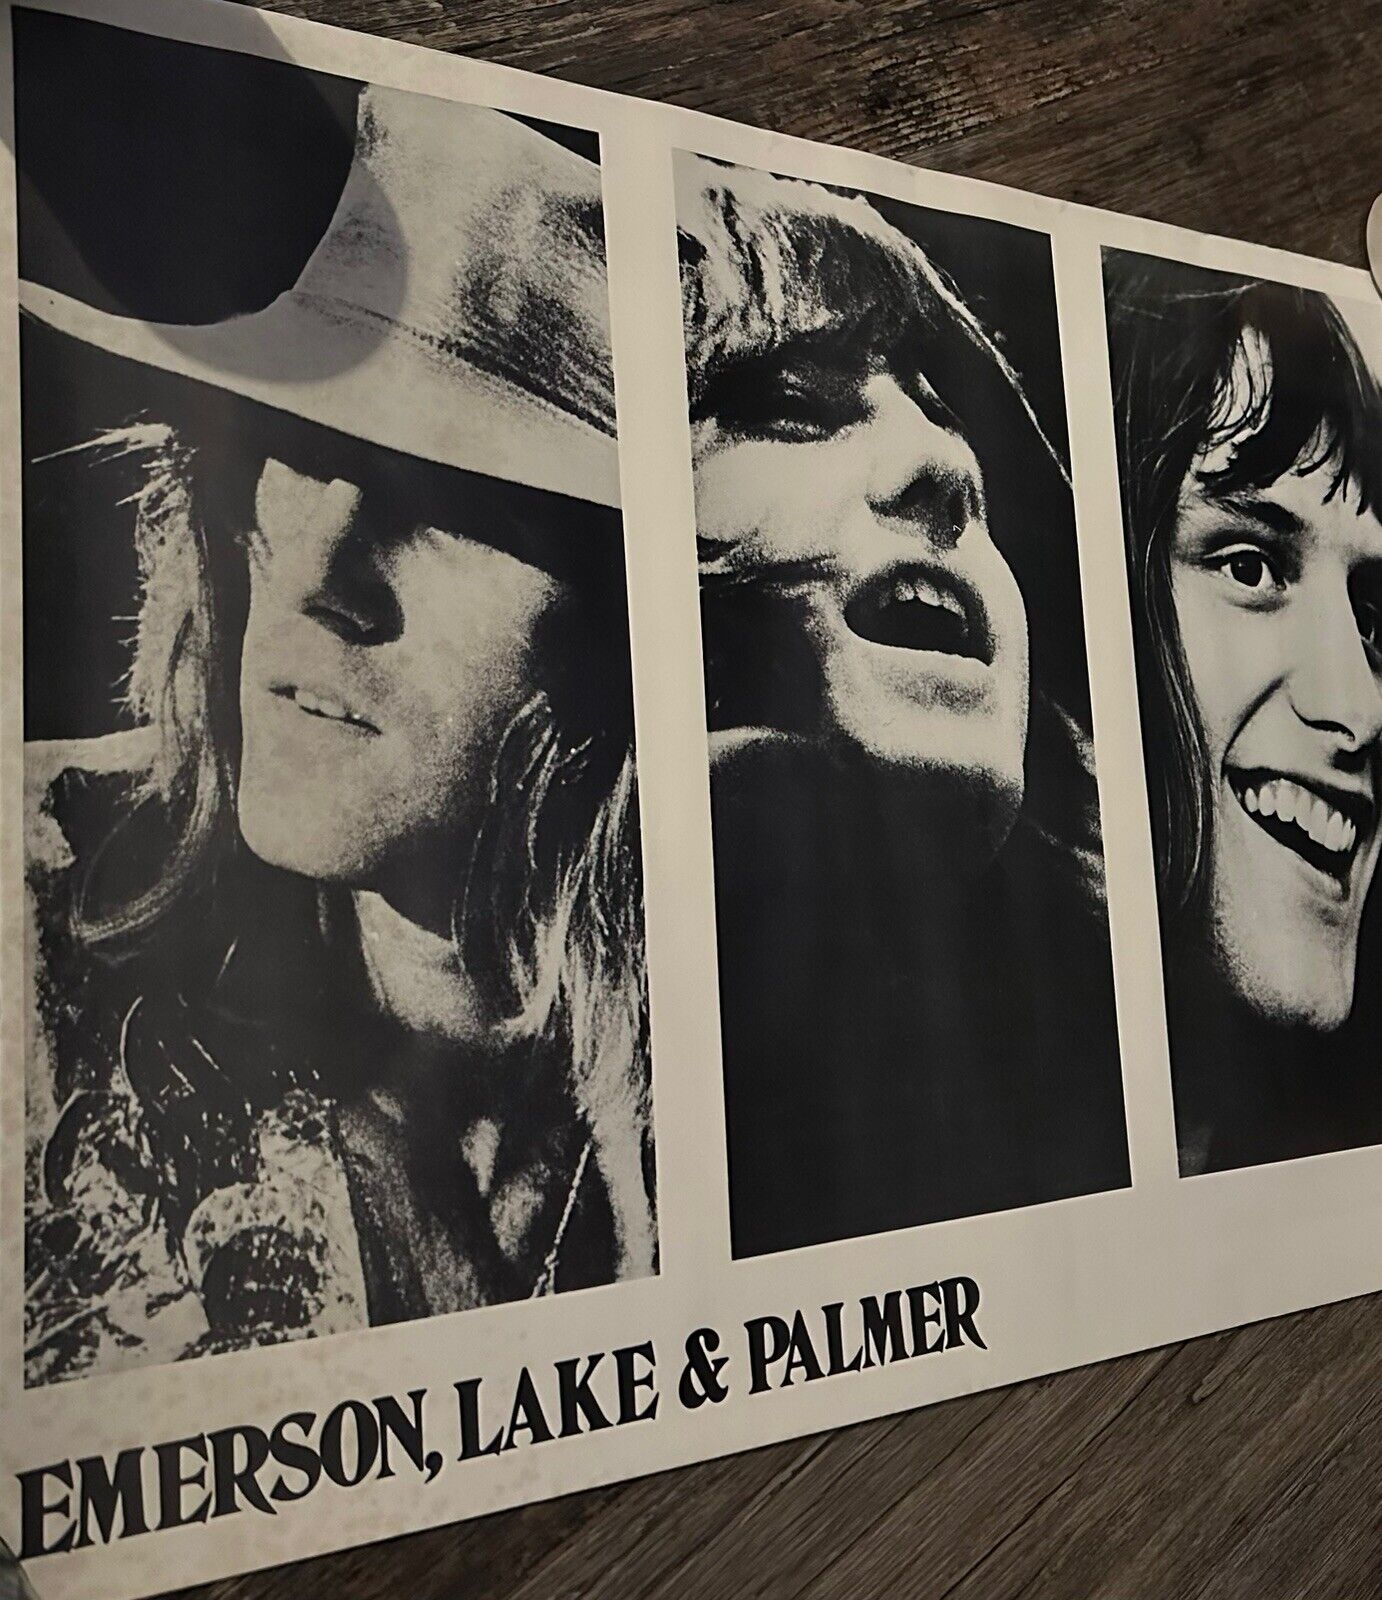 PROG ROCK / Emerson, Lake & Palmer: superb and rare 1971 - 1972 concert poster